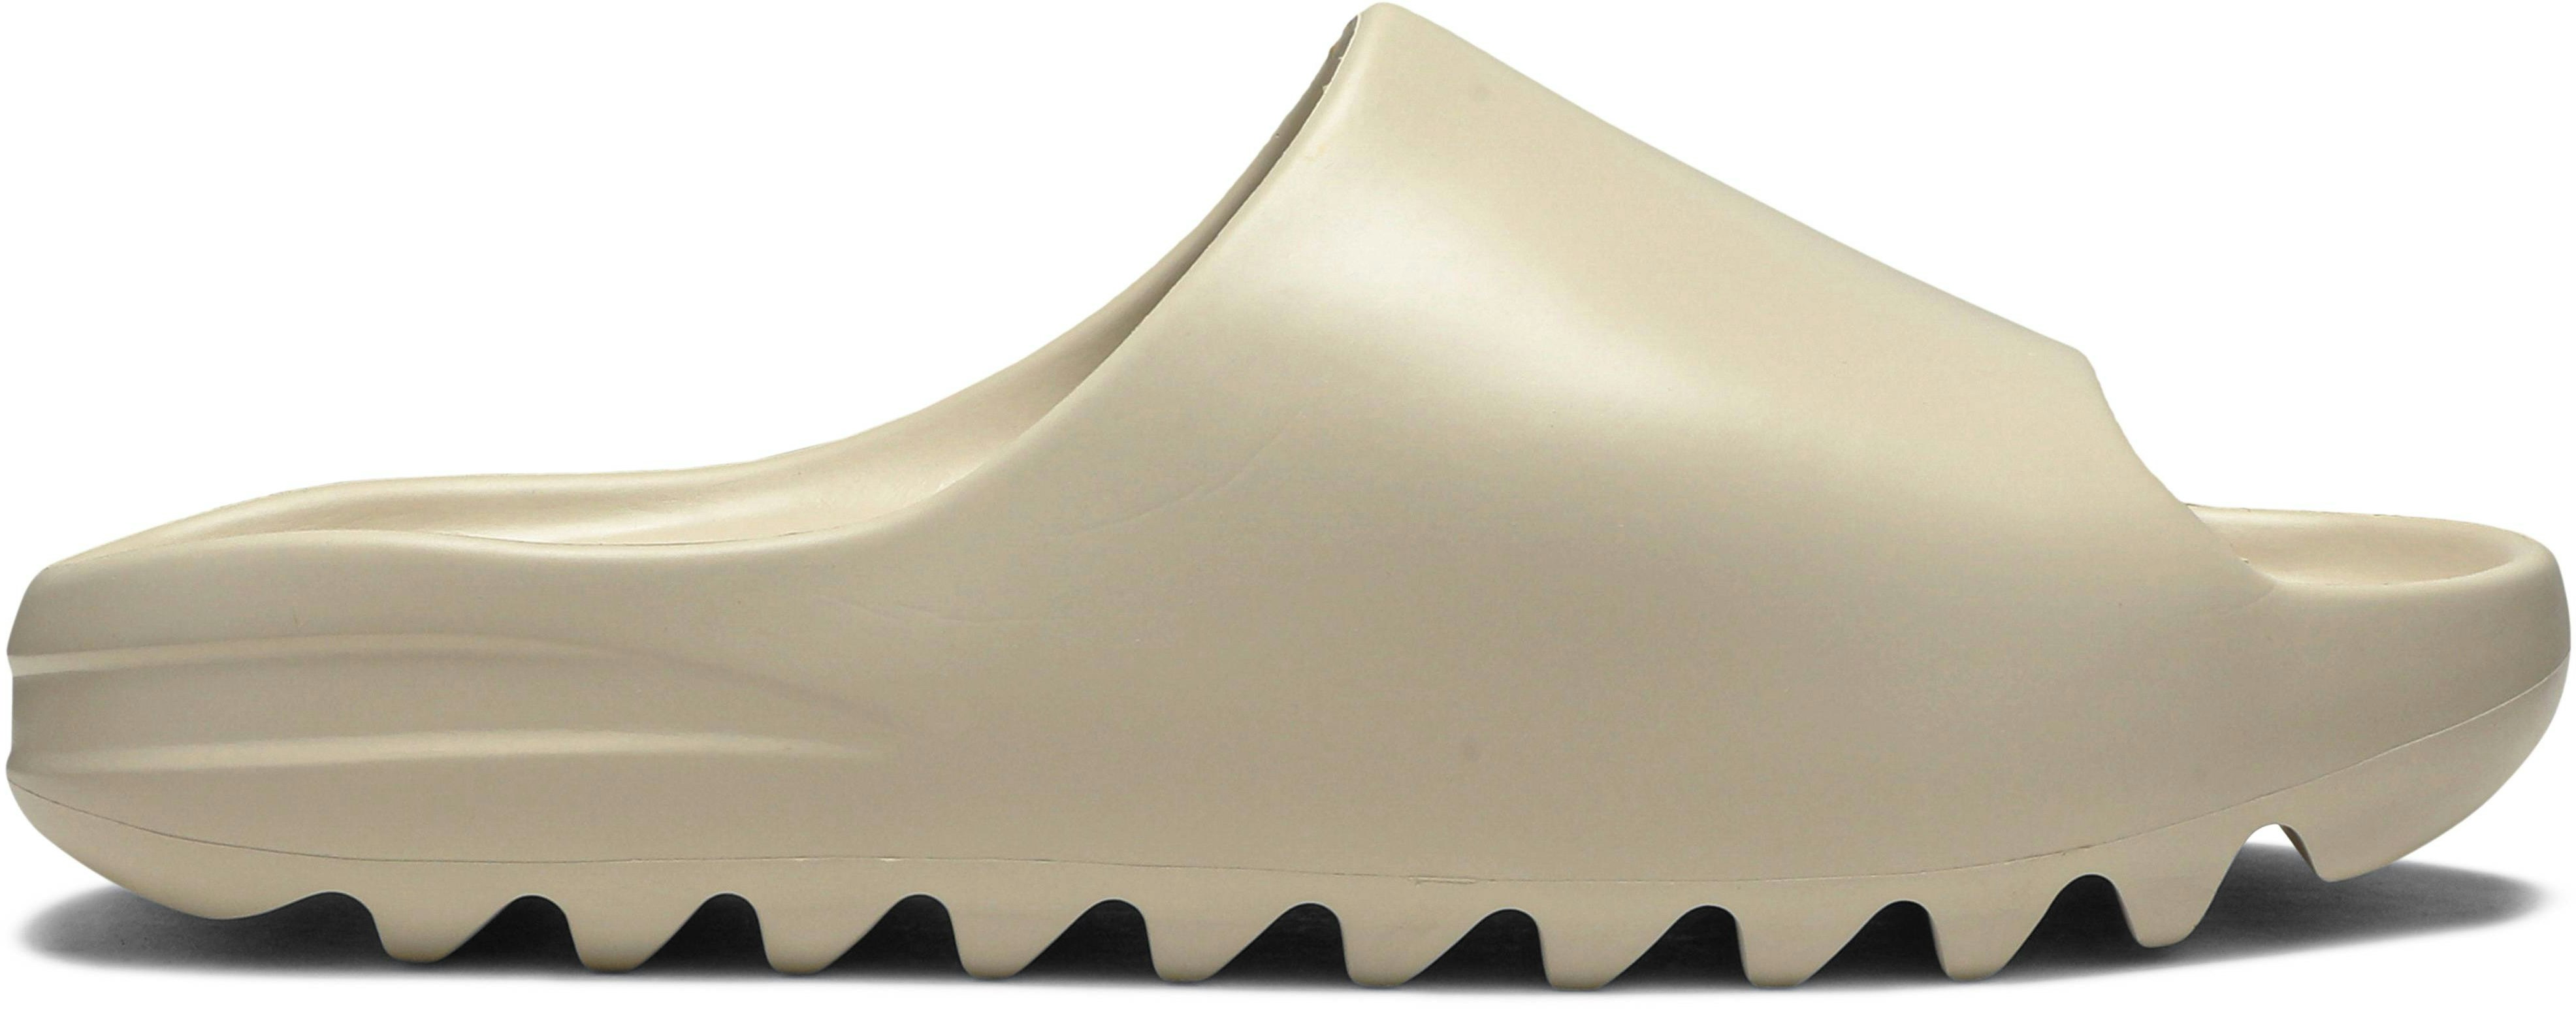 adidas Originals Yeezy Slide BONE 27.5cm